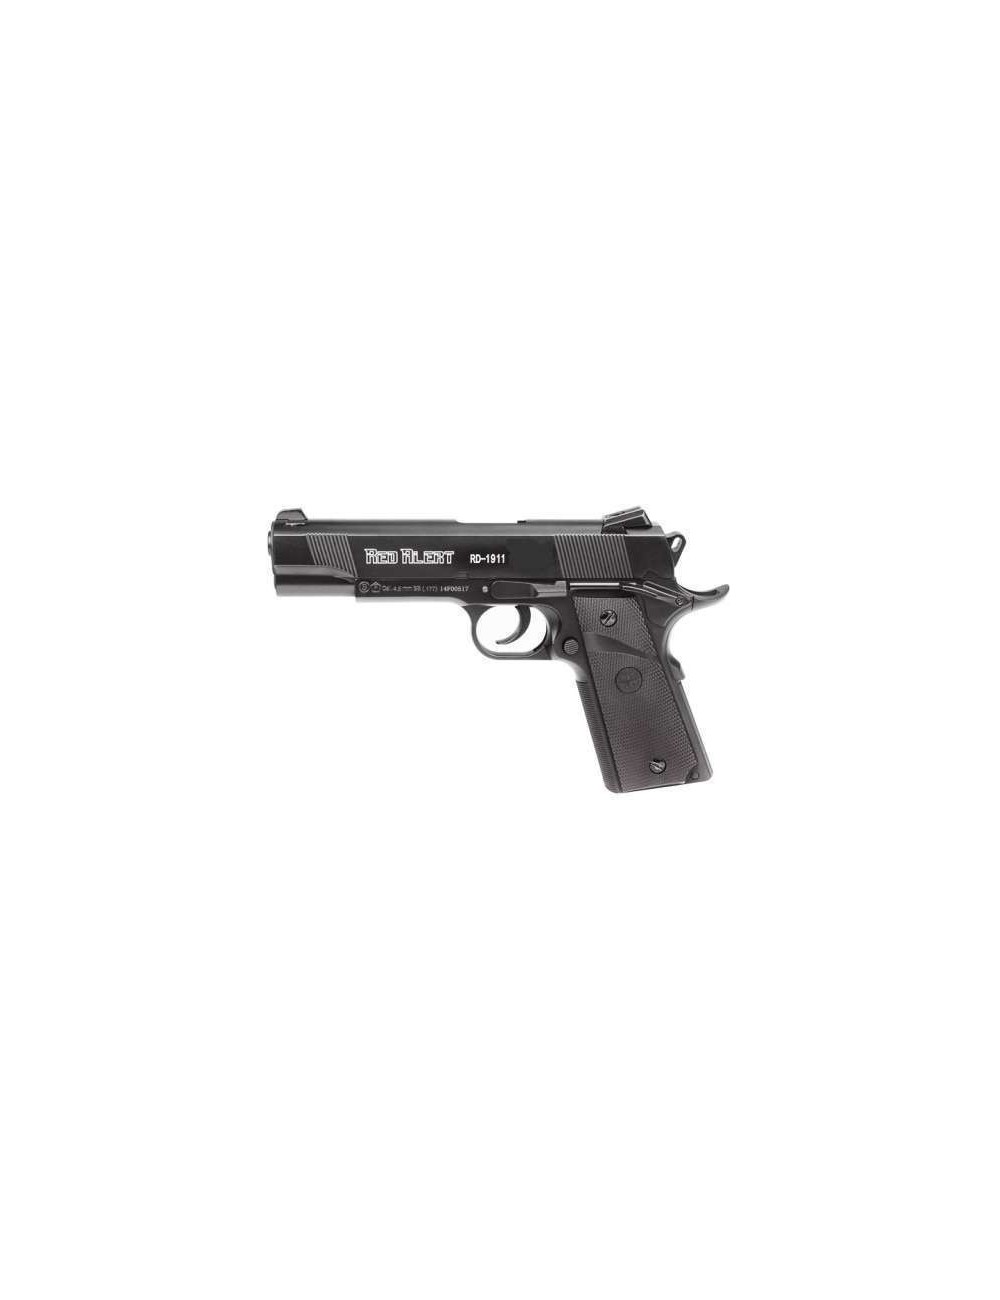 Pistola Gamo P900 4,5mm + Balines + Tragabalines + Blancos